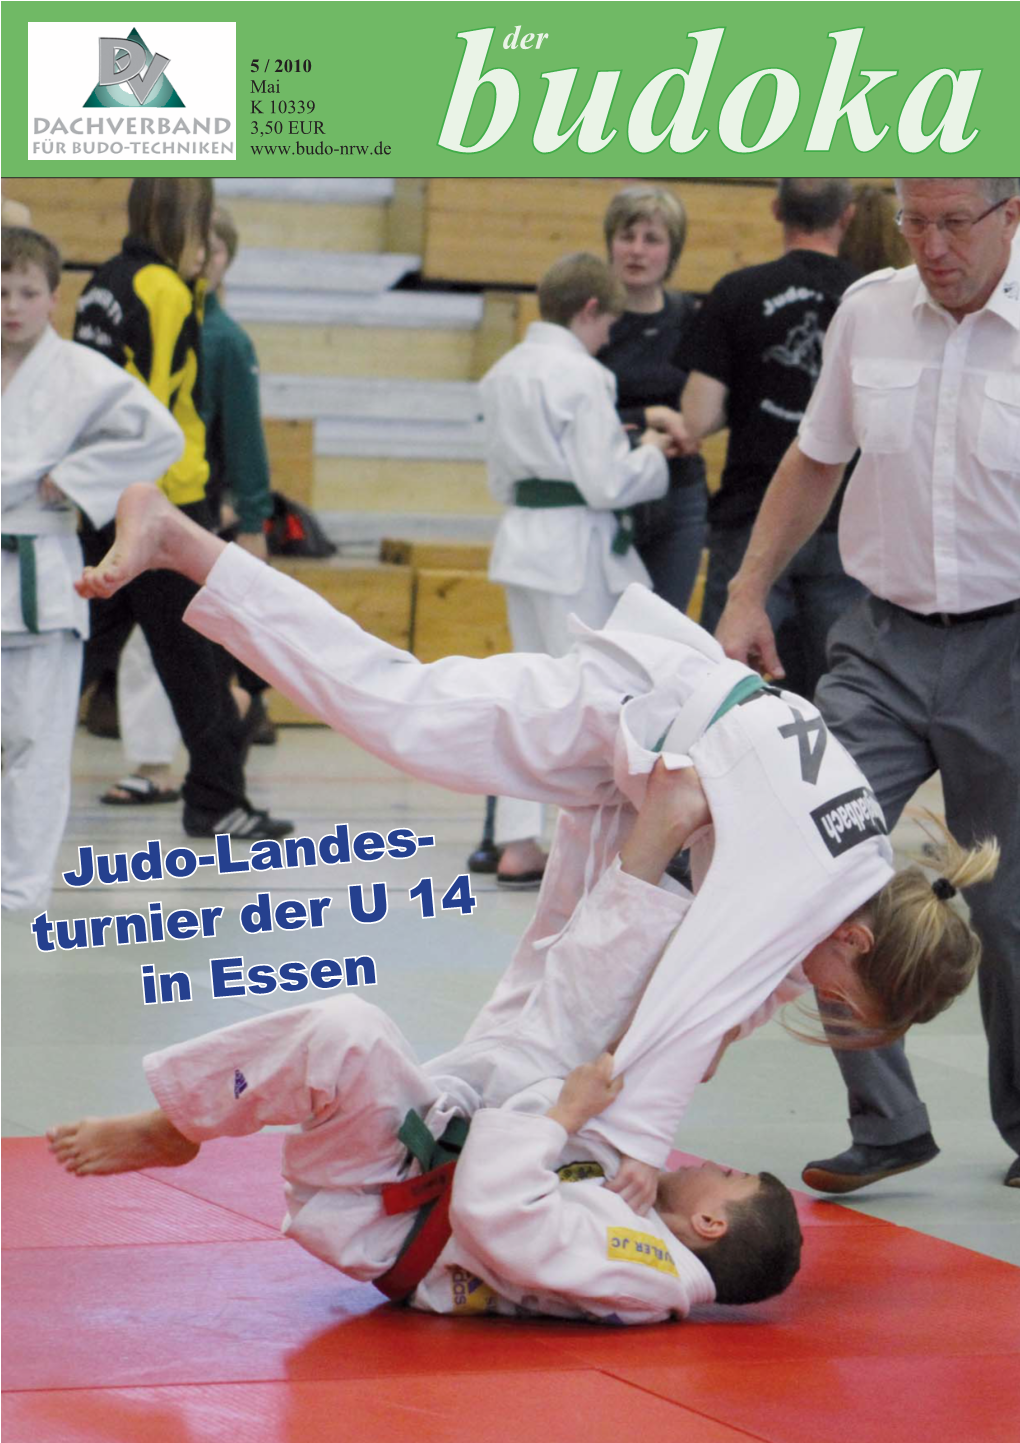 Judo-Landes- Turnier Der U 14 in Essen Der Jugendlehrgang in Lipp- 5 / 2010 Mai K 10339 3,50 EUR Stadt